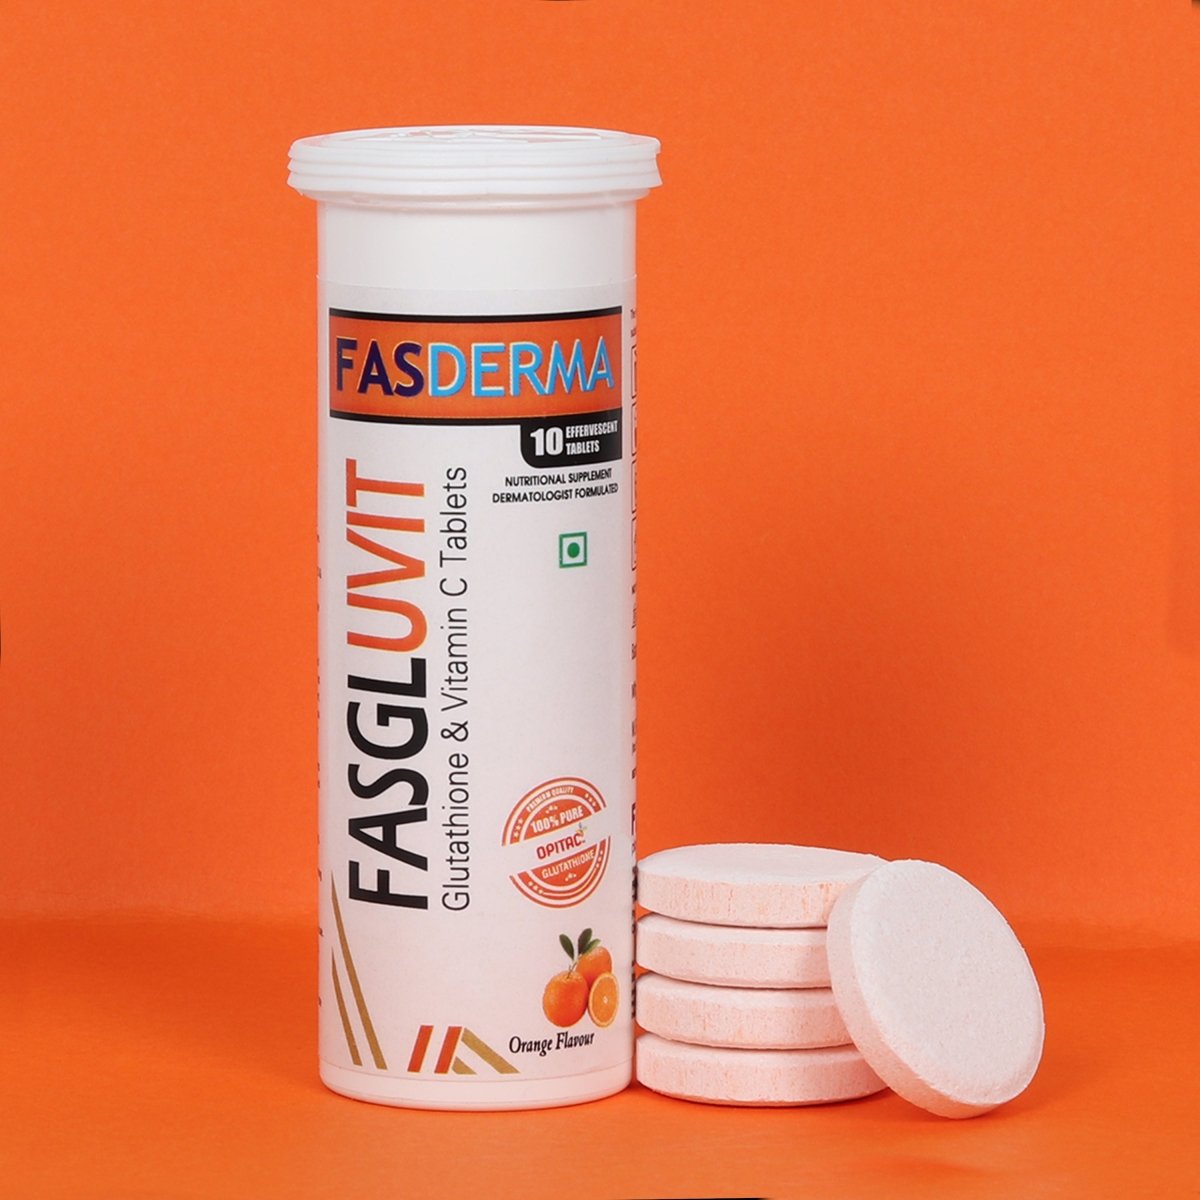 FasGLuvit ( OPITAC ) - Glutathione & Vitamin C Tablets - Effervescent Tablets - Skin Glow - 10 Tablets - Orange Flavour - Fasderma India